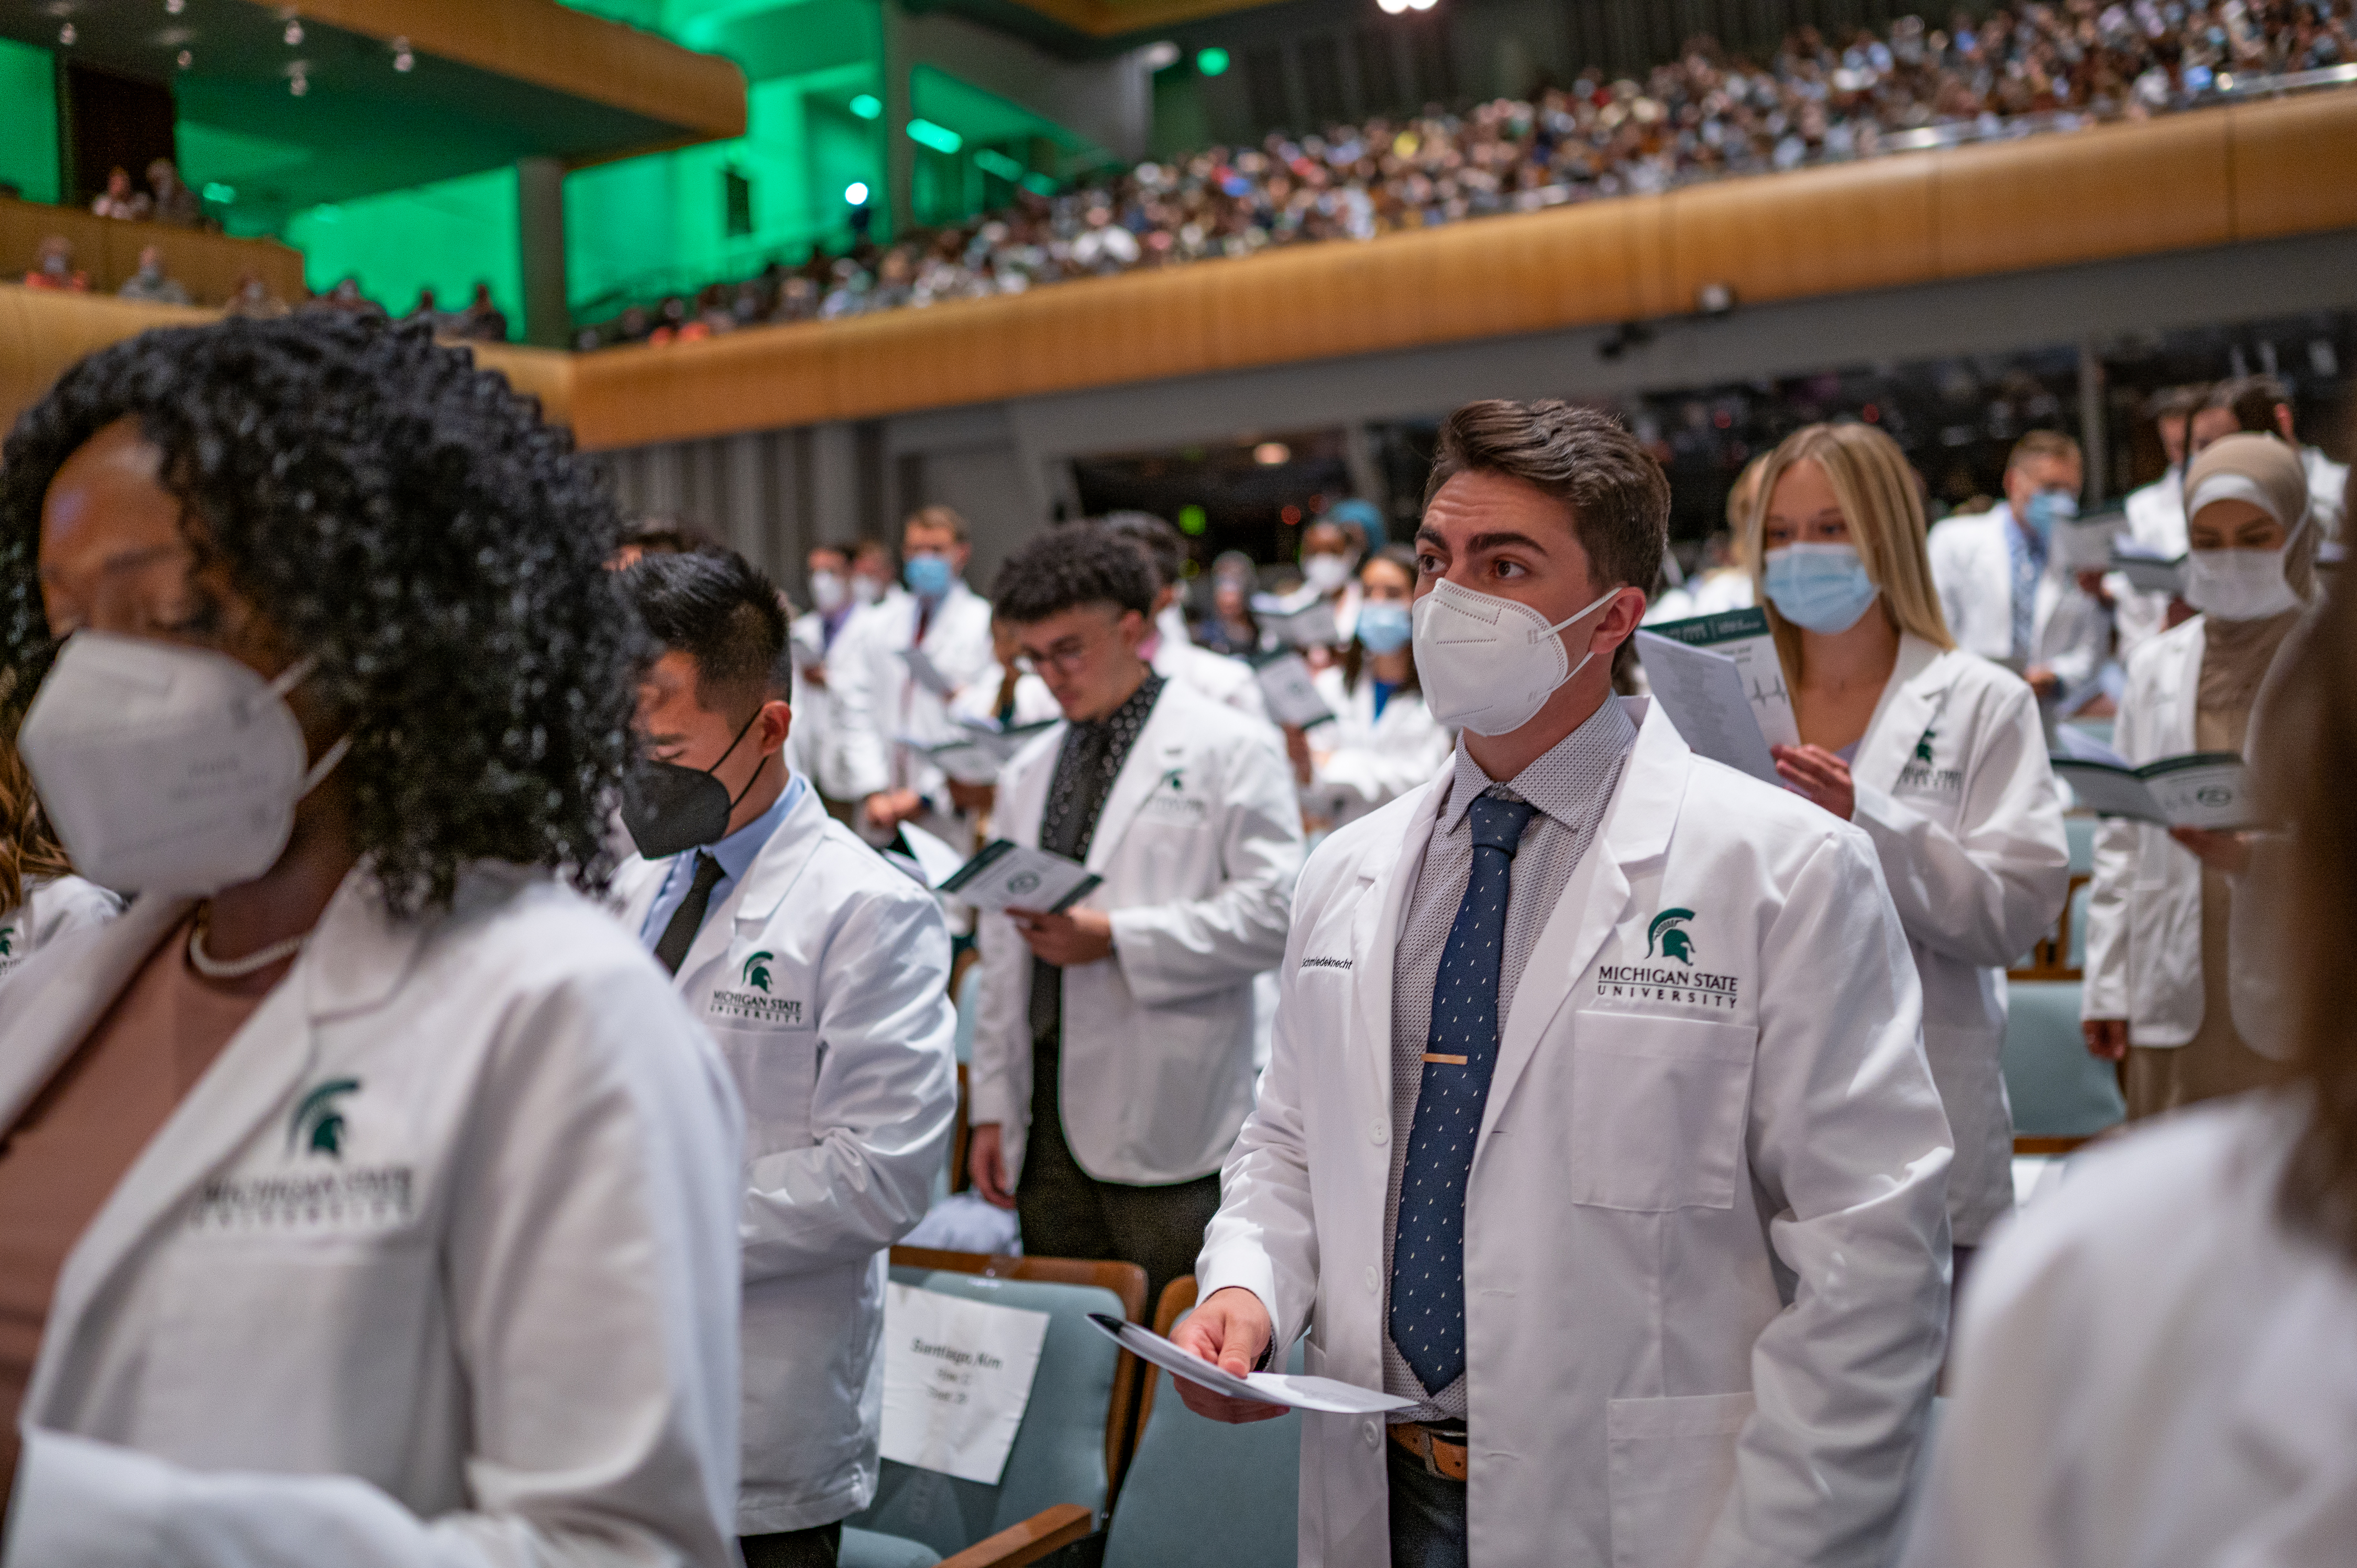 Medical students wearing white coats reading Hippocratic Oath